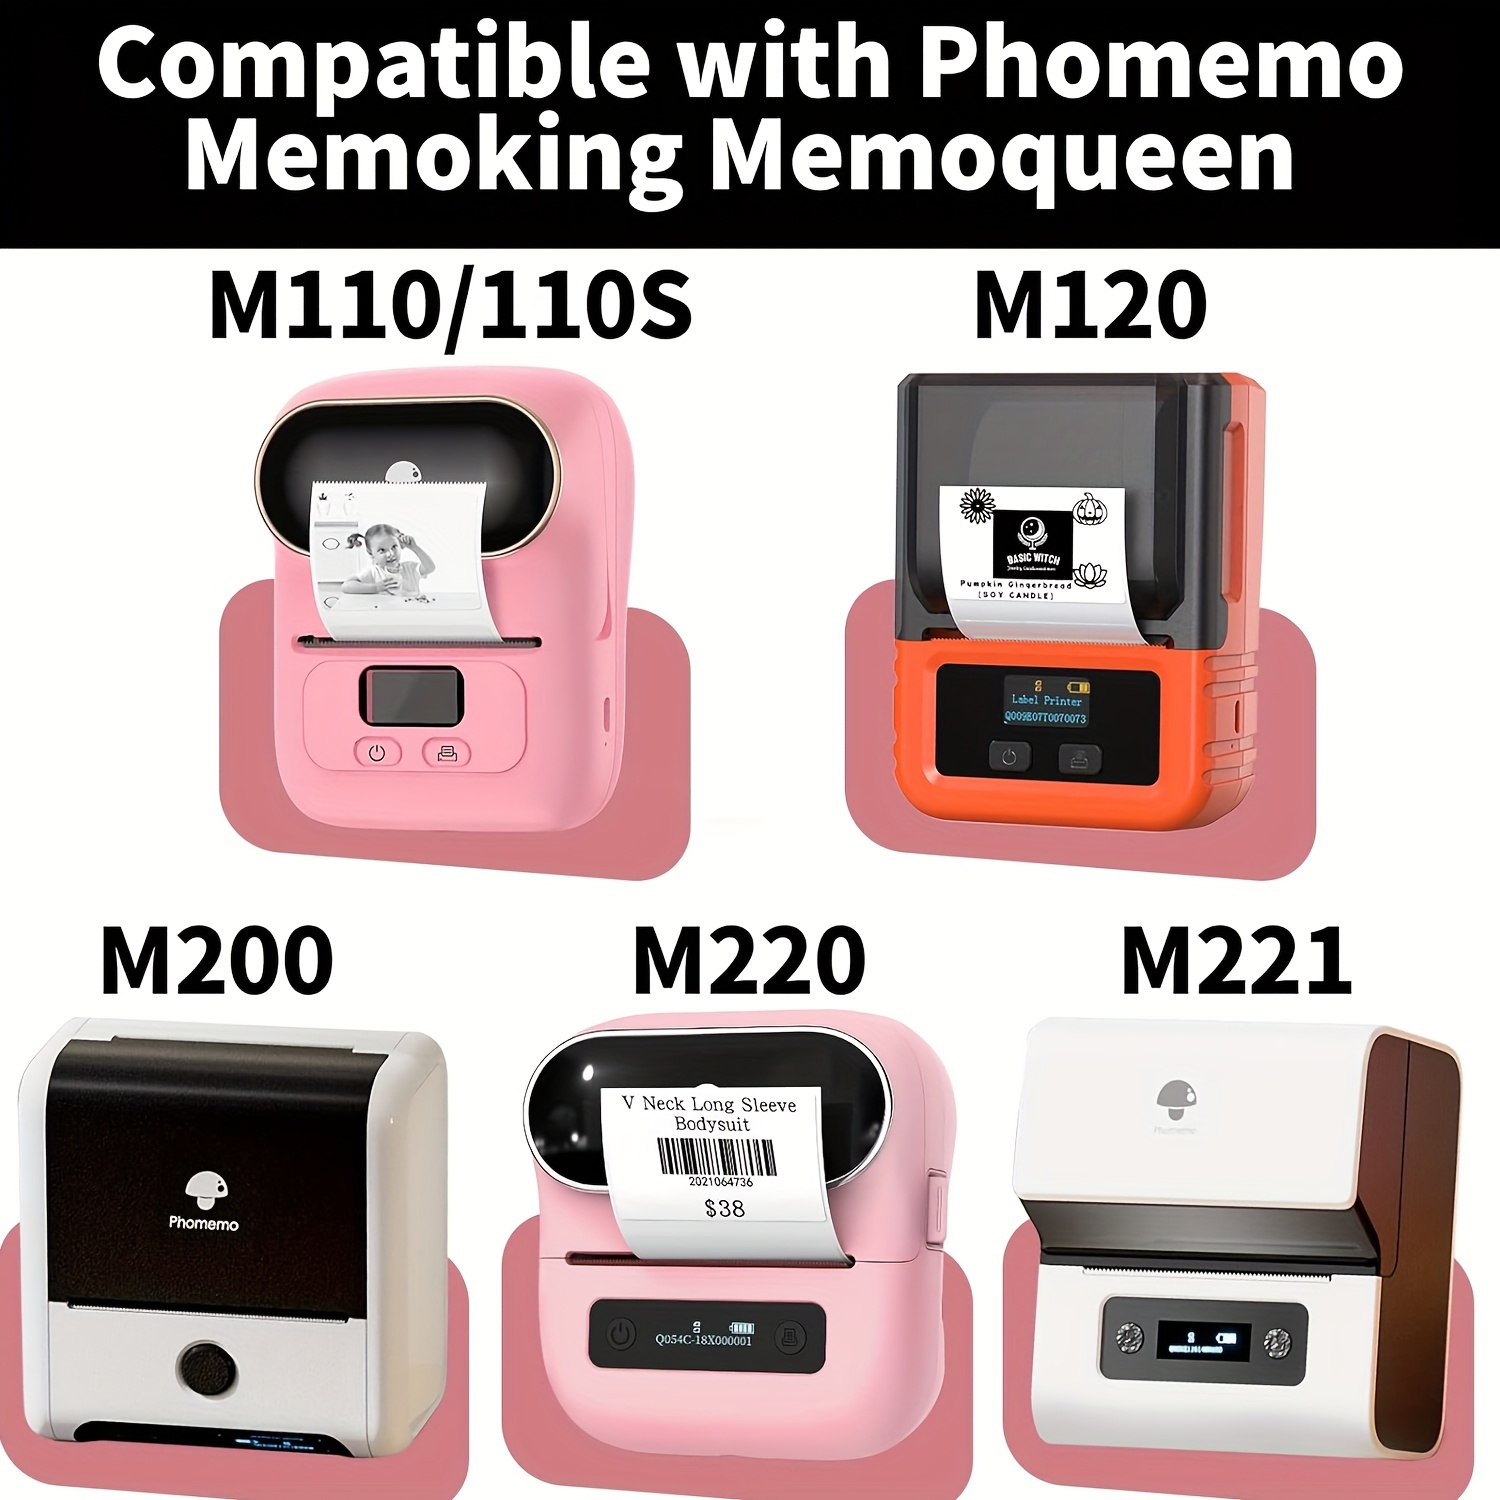 Phomemo M200 Barcode Printer